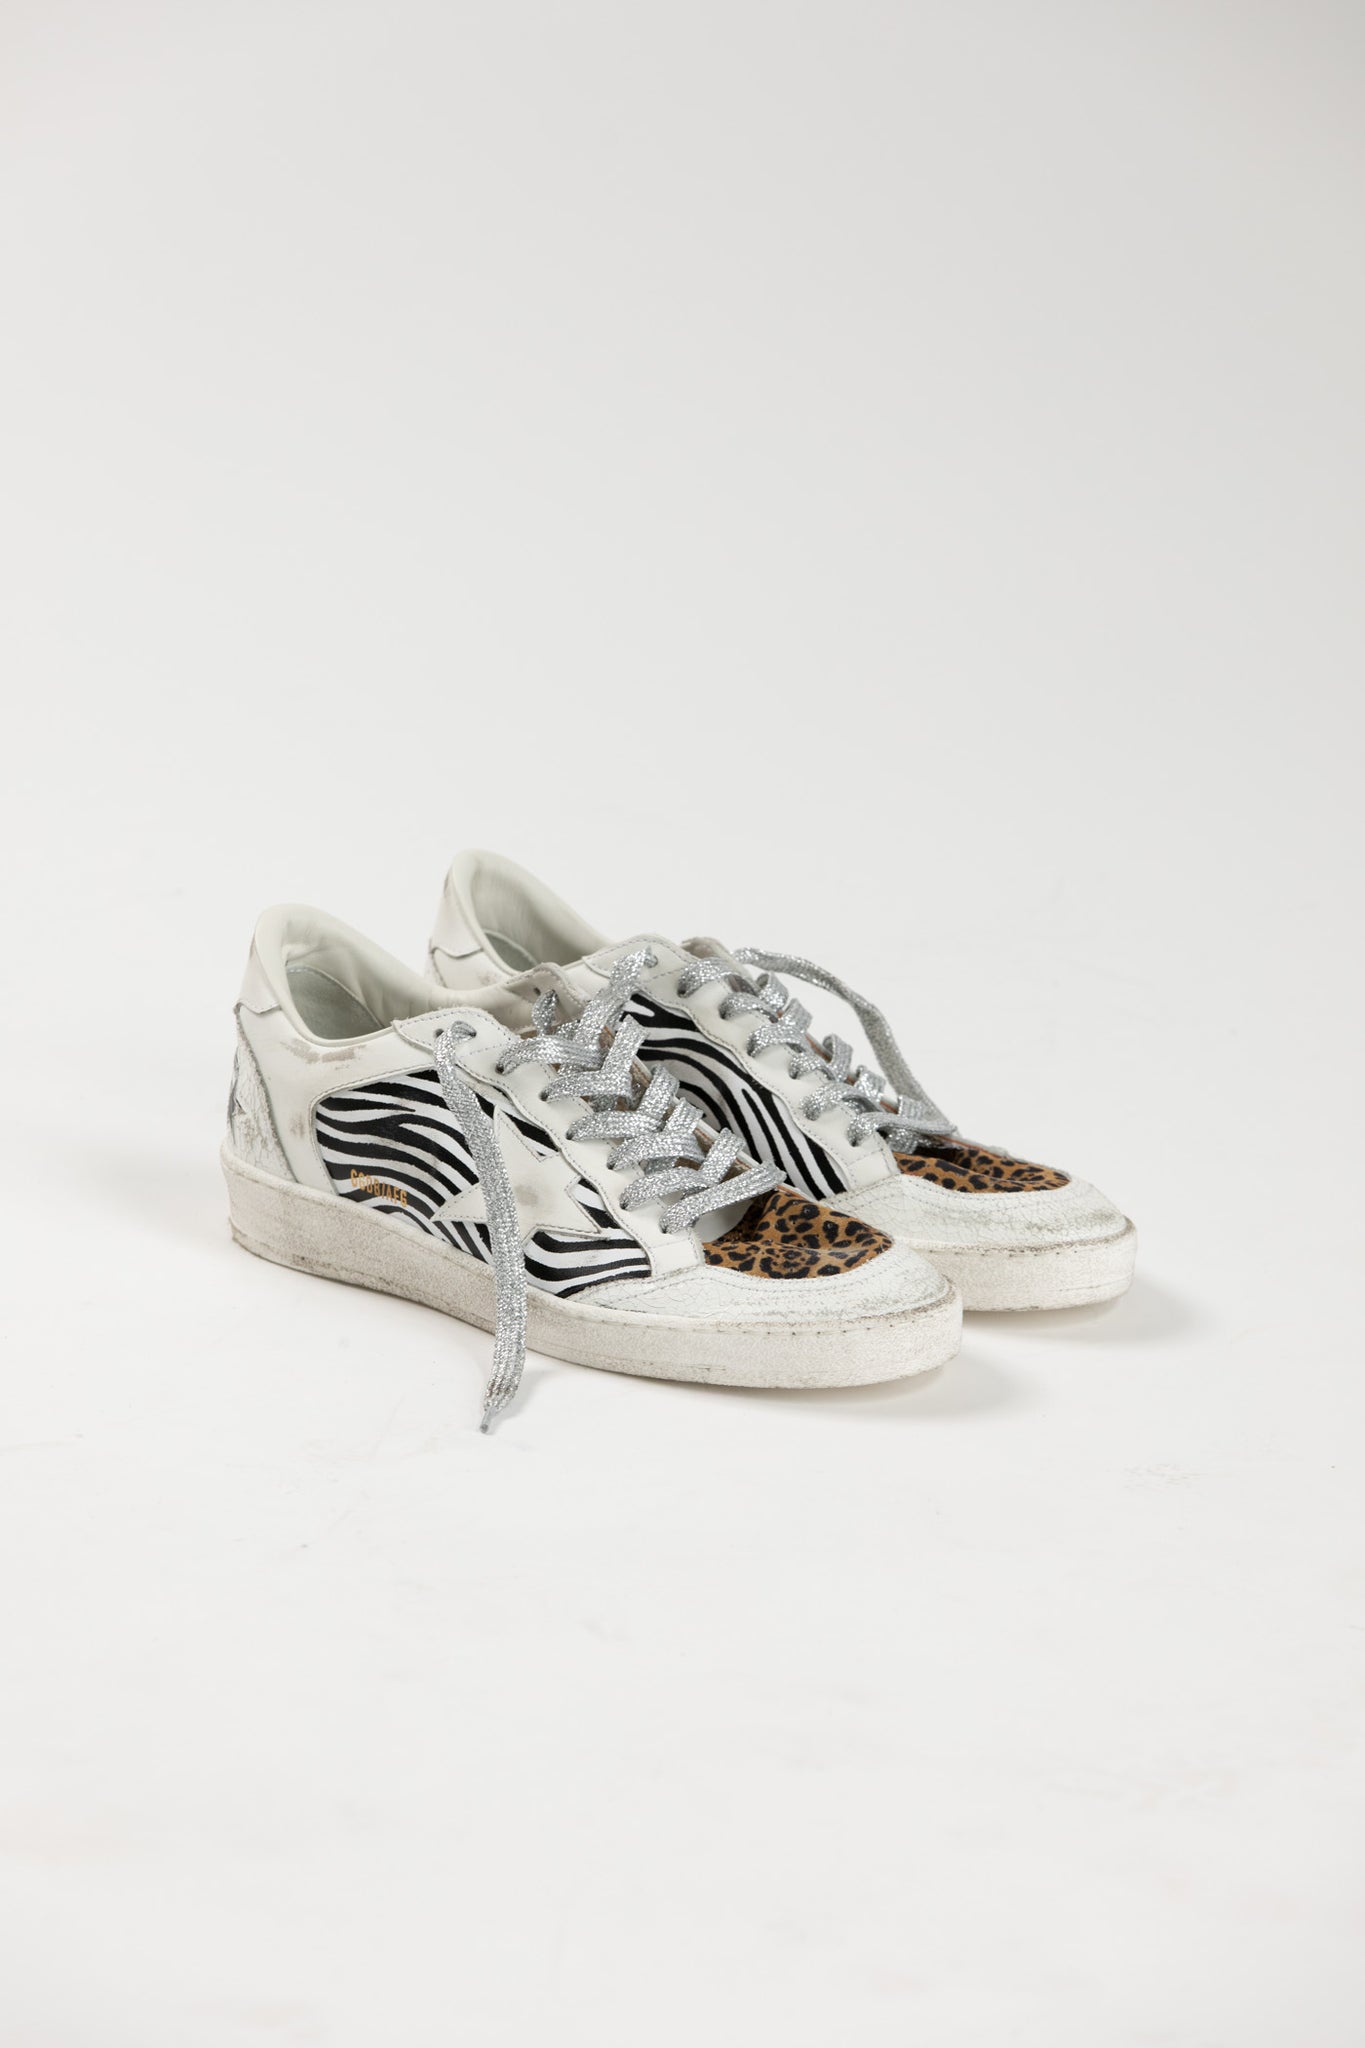 Ball Star Zebra Sneakers